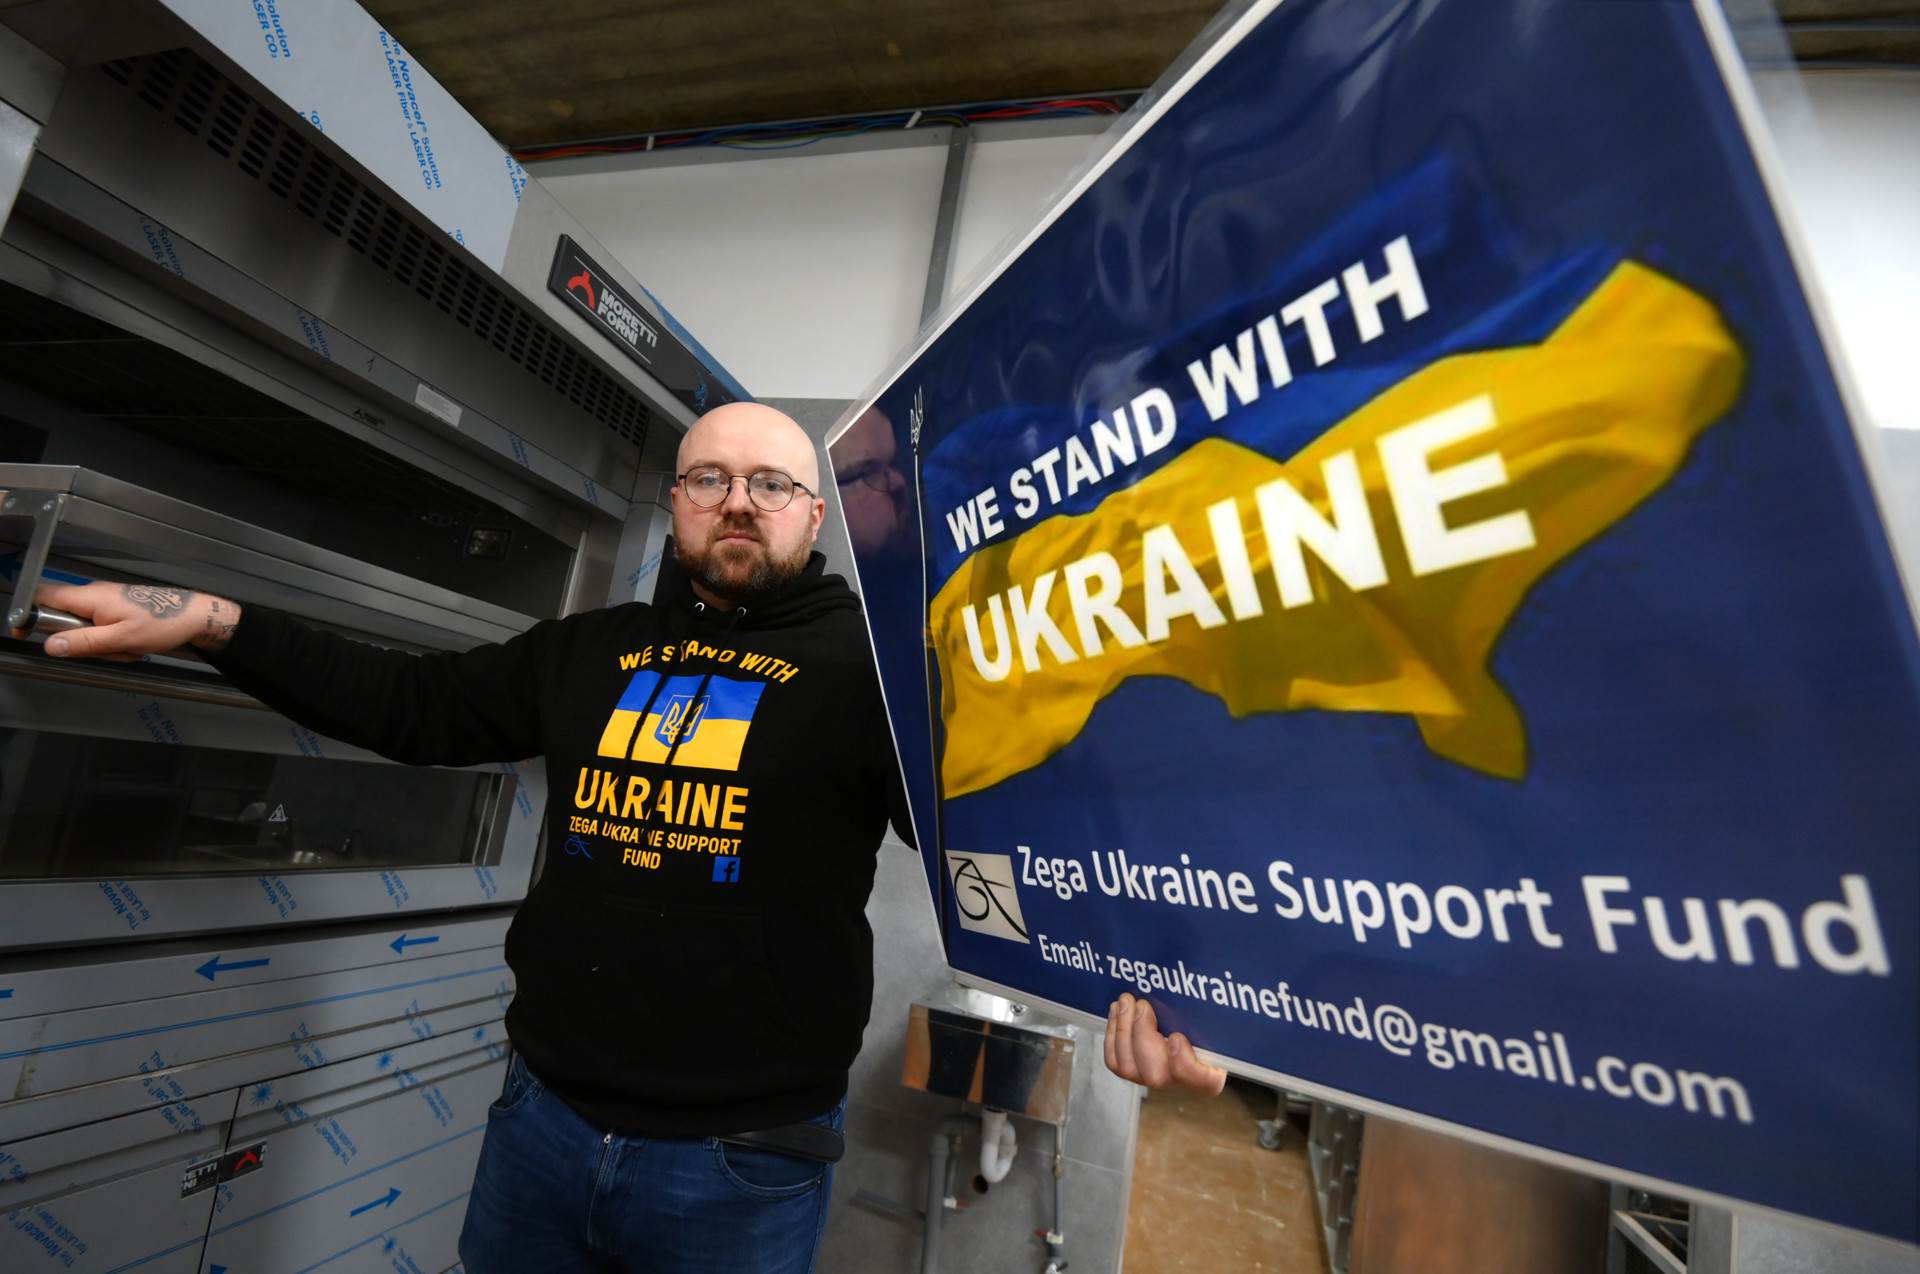 Dungannon man preparing for mercy mission to Ukraine